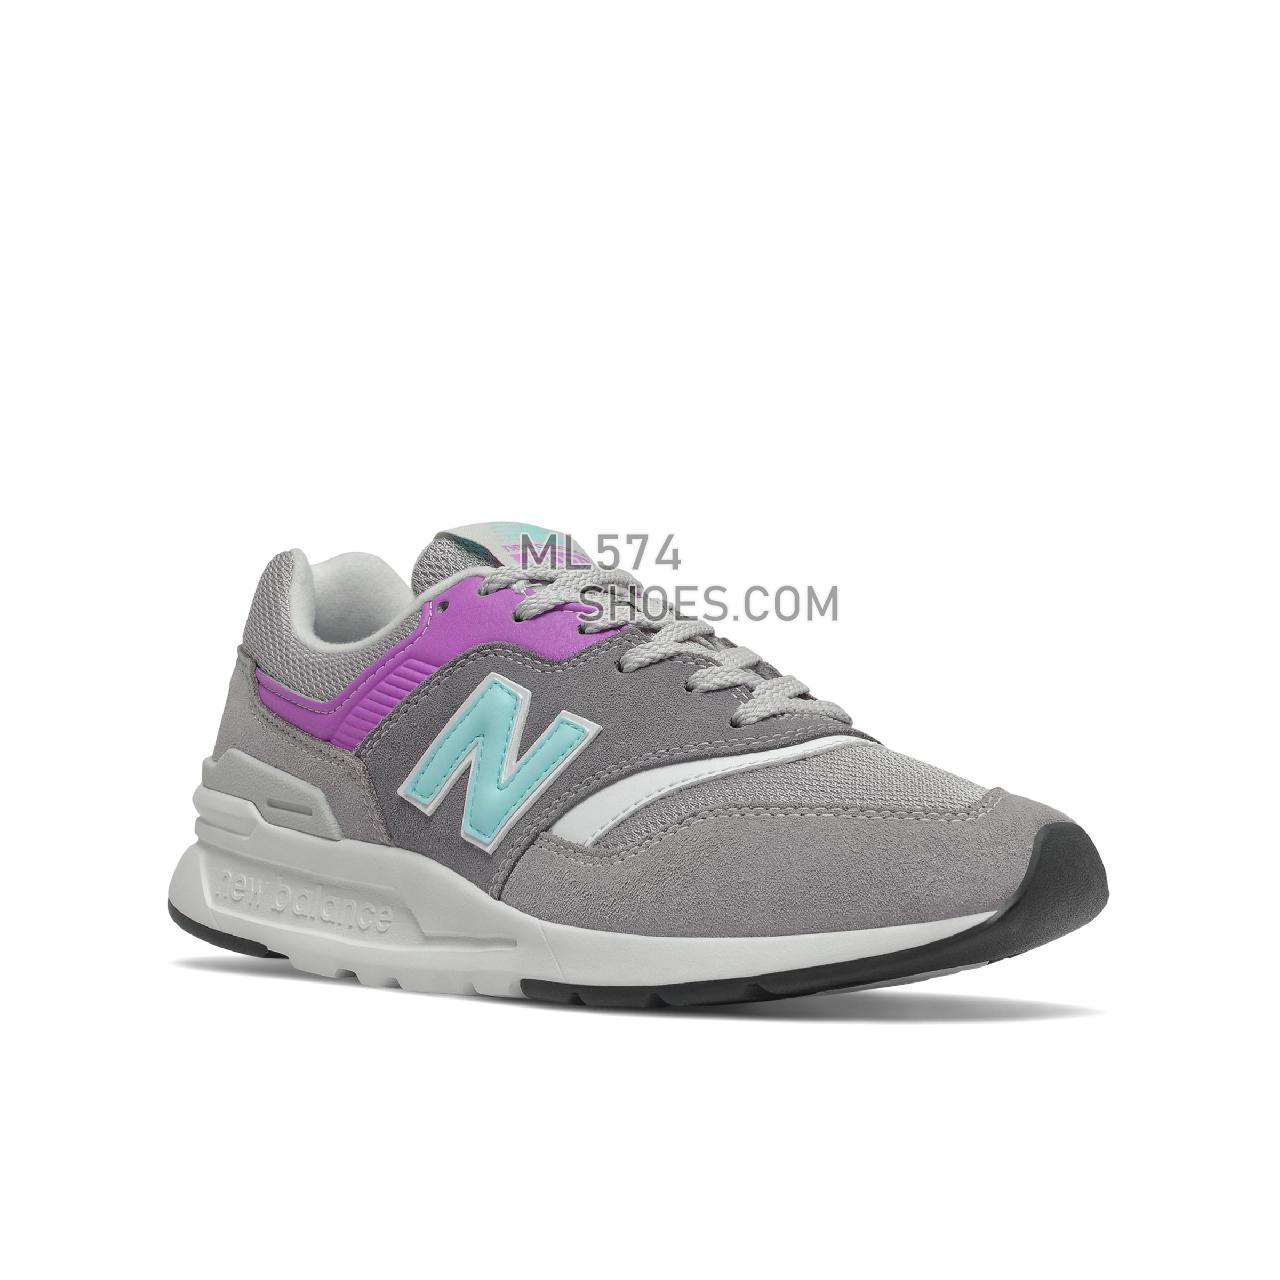 New Balance 997H - Women's Classic Sneakers - Grey with Purple - CW997HVA